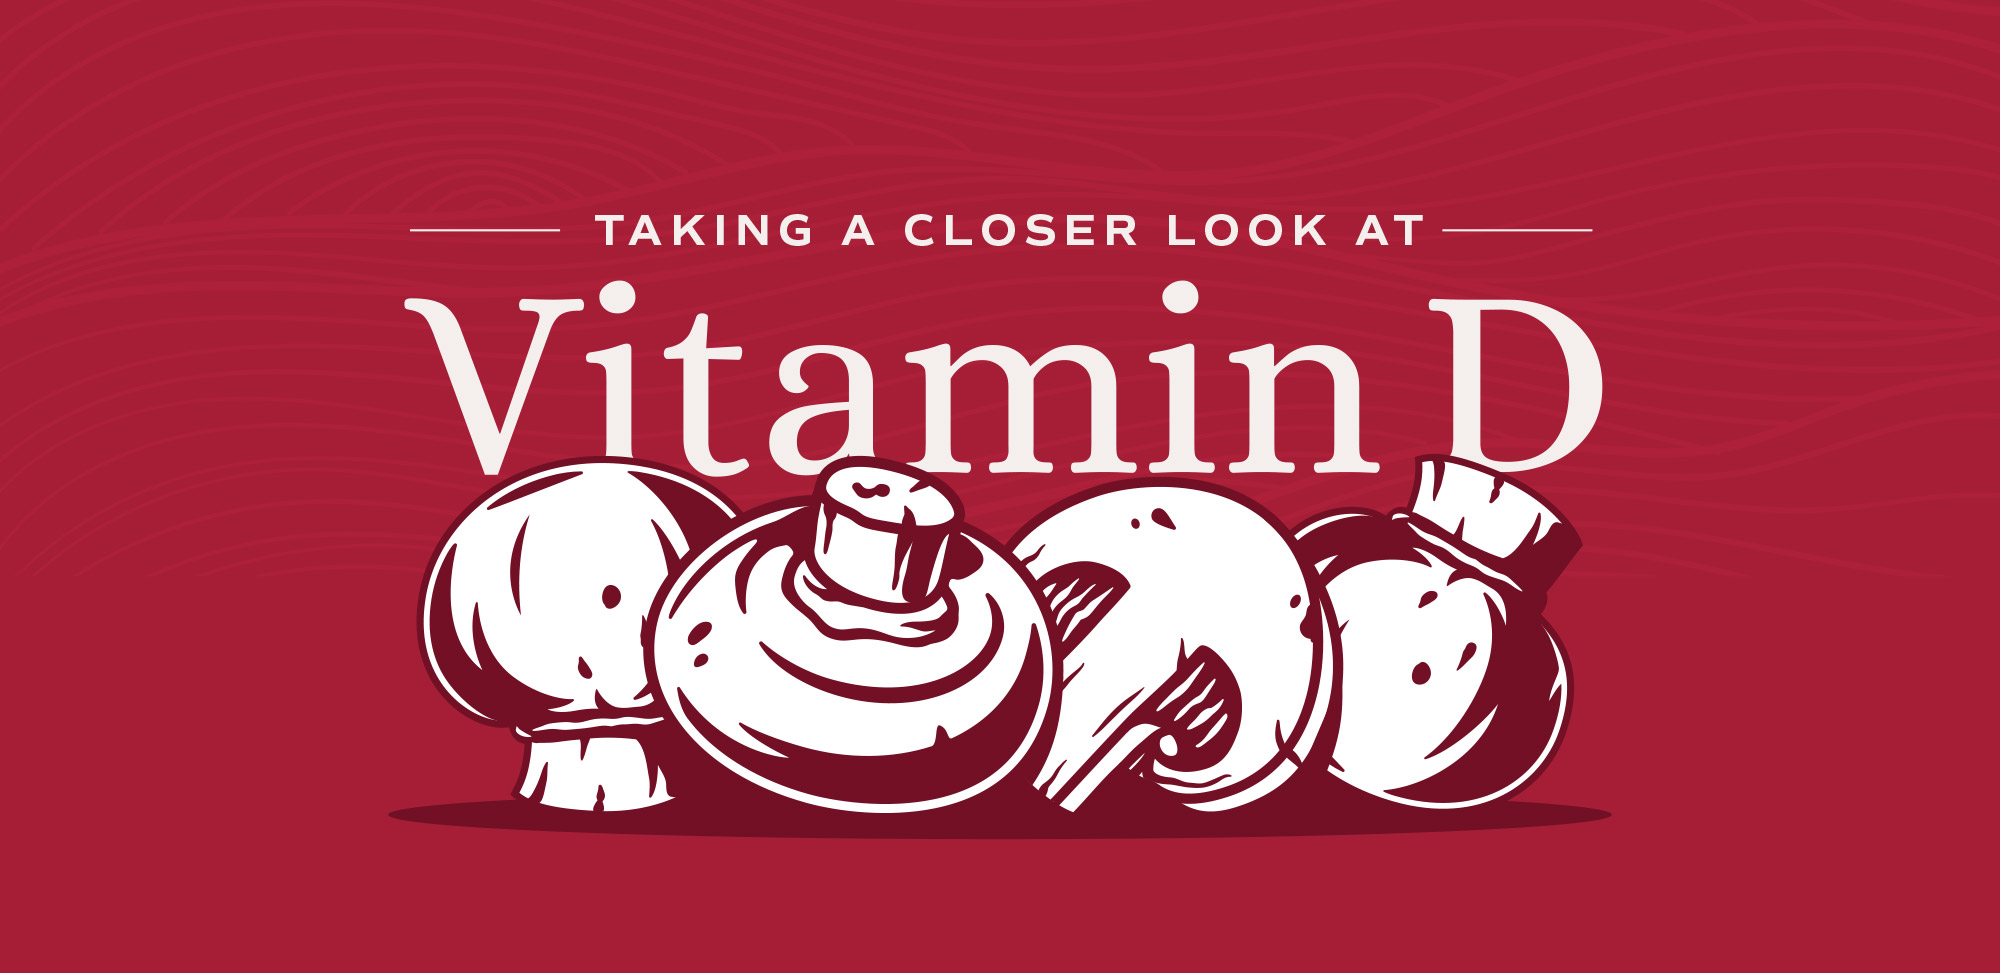 Taking a closer look at Vitamin D